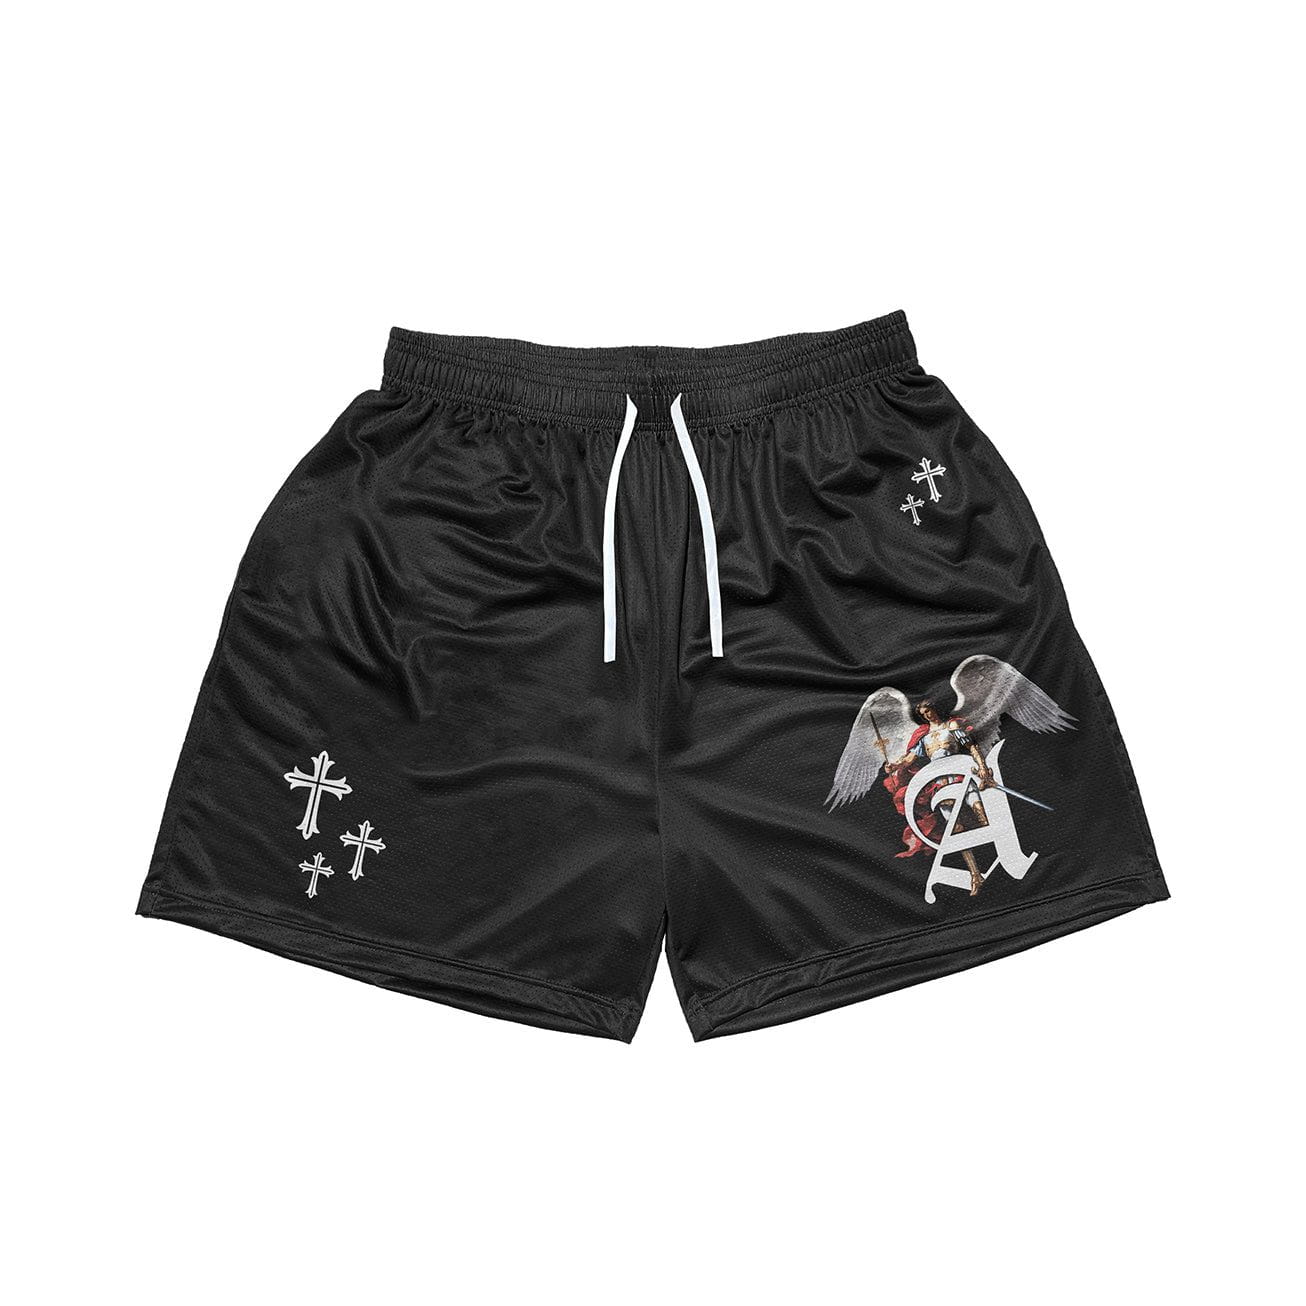 Stylish Retro Cross Angel Stretch Shorts